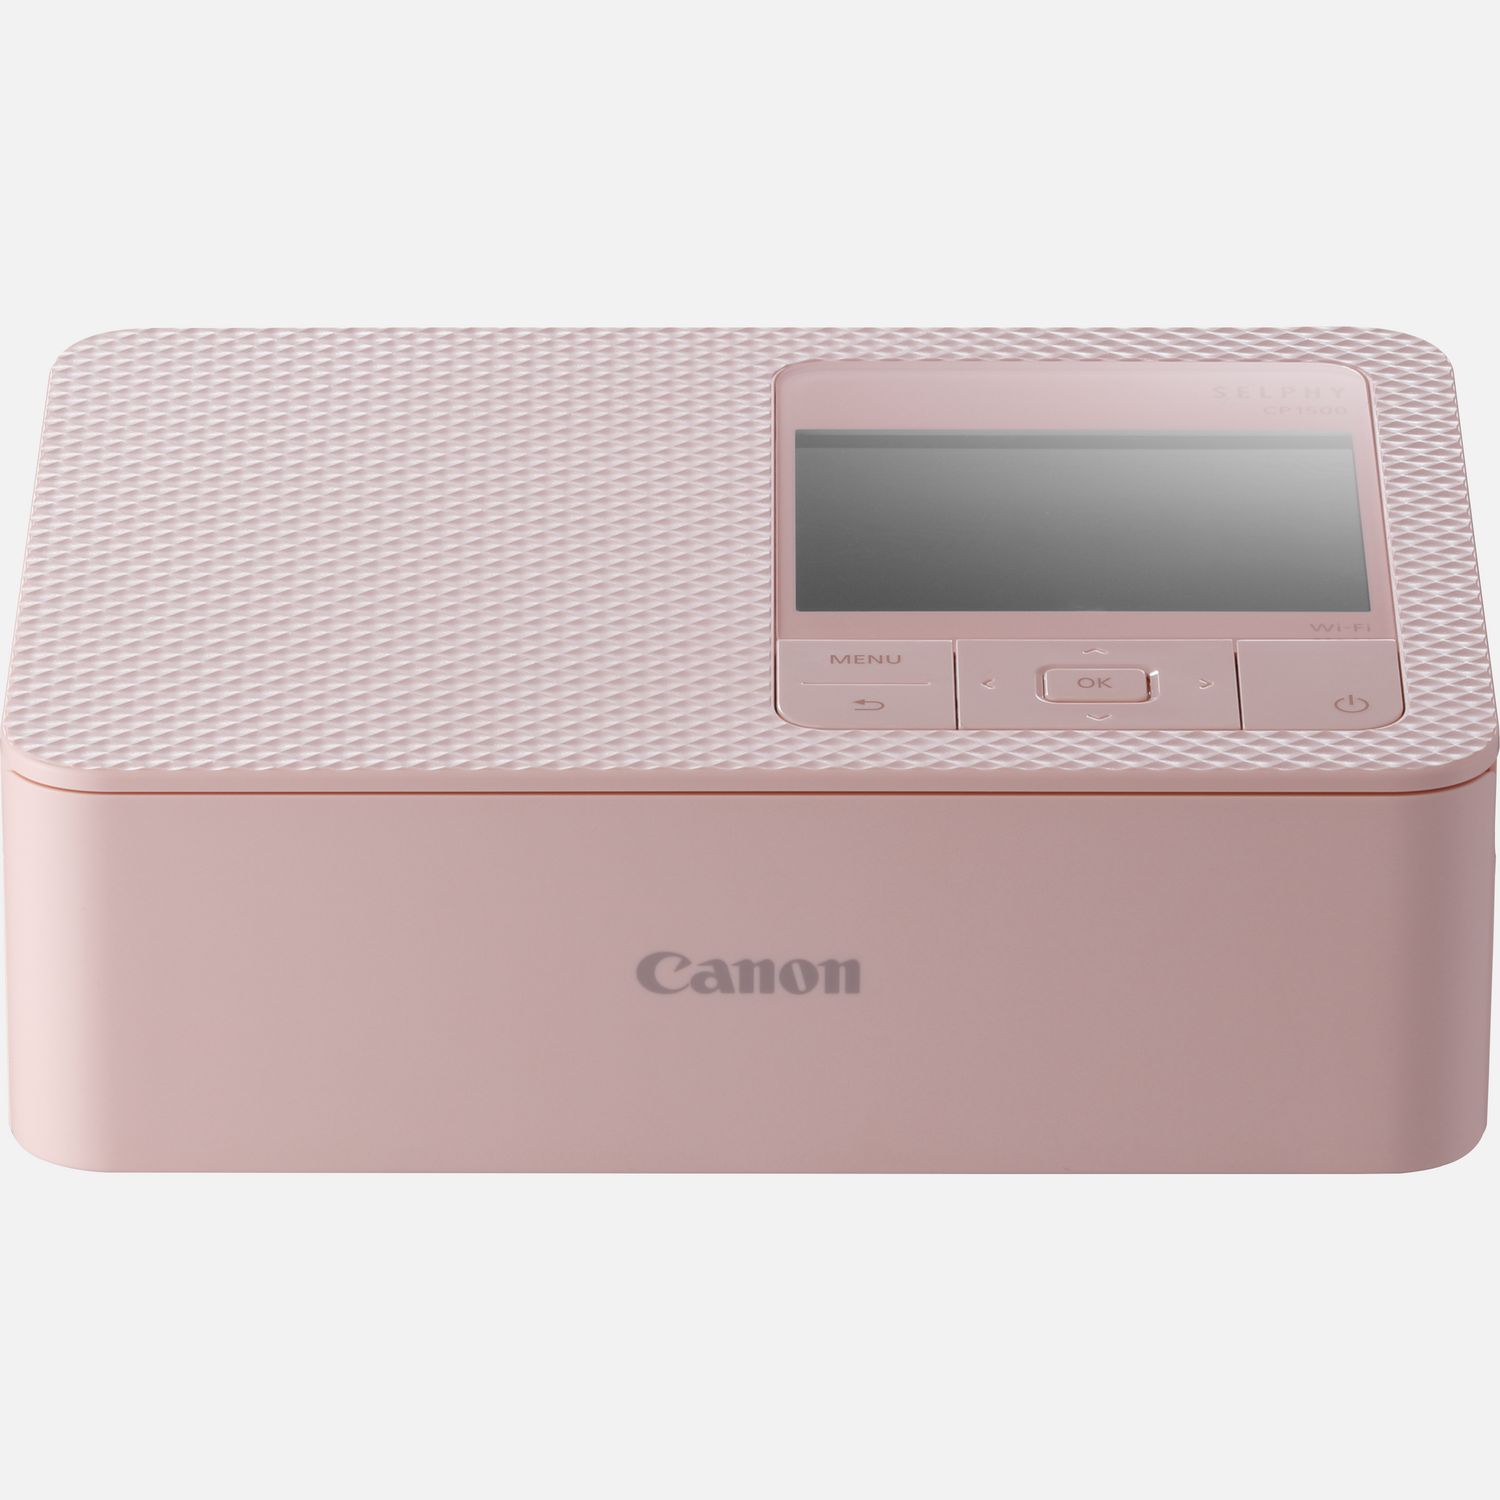 Imprimante portable Photo Canon Selphy CP1300 (Rose) à prix bas